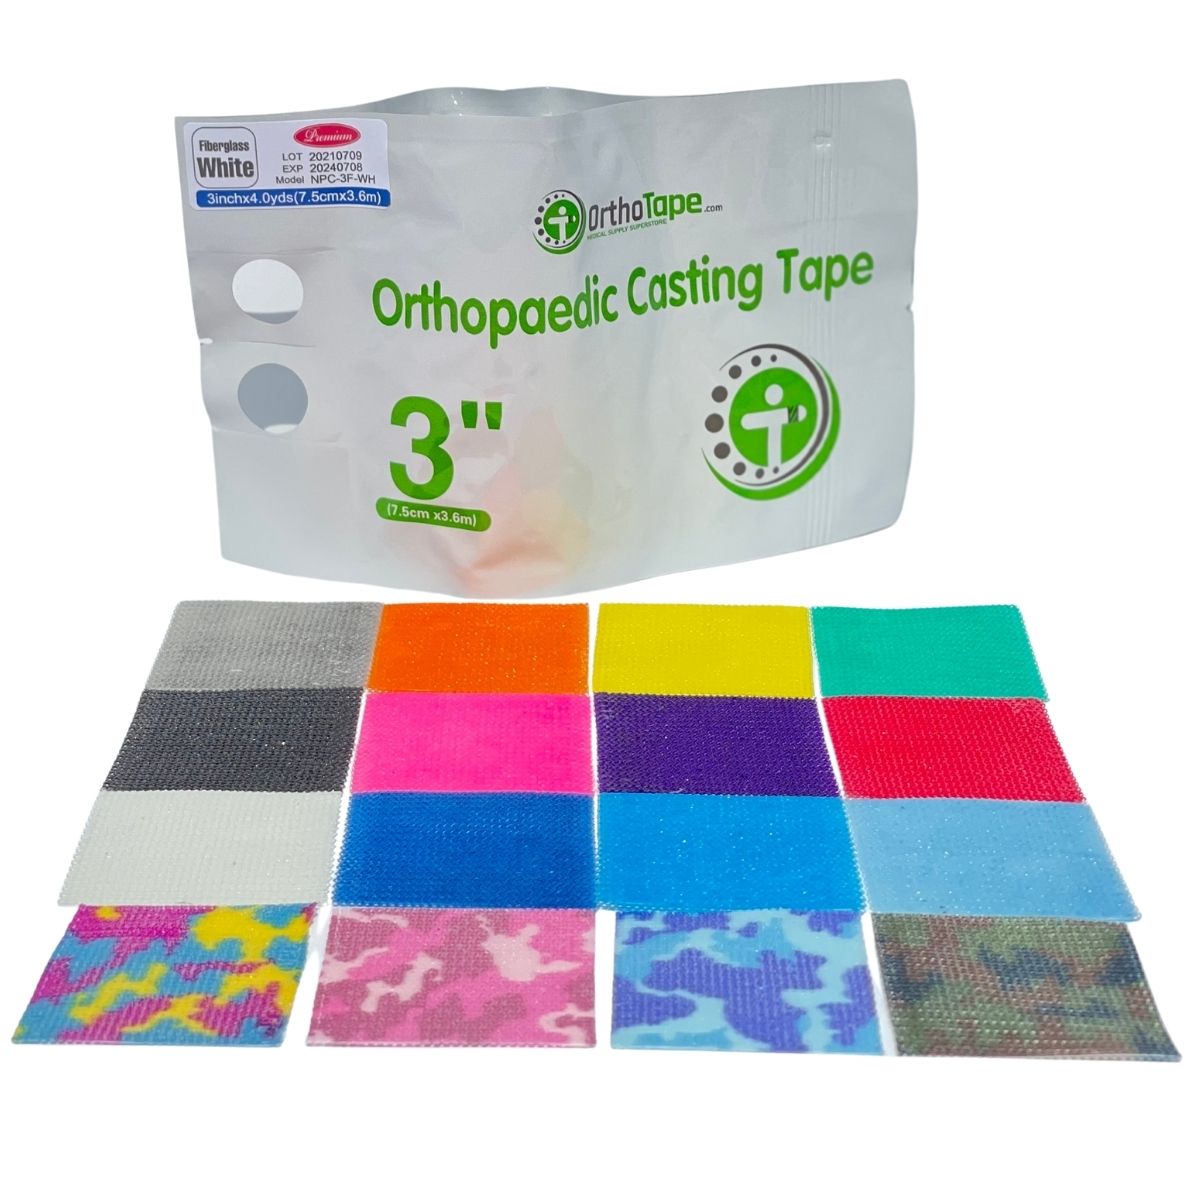 OrthoTape Premium Fiberglass Casting Tape |3 INCH - 1 ROLL |